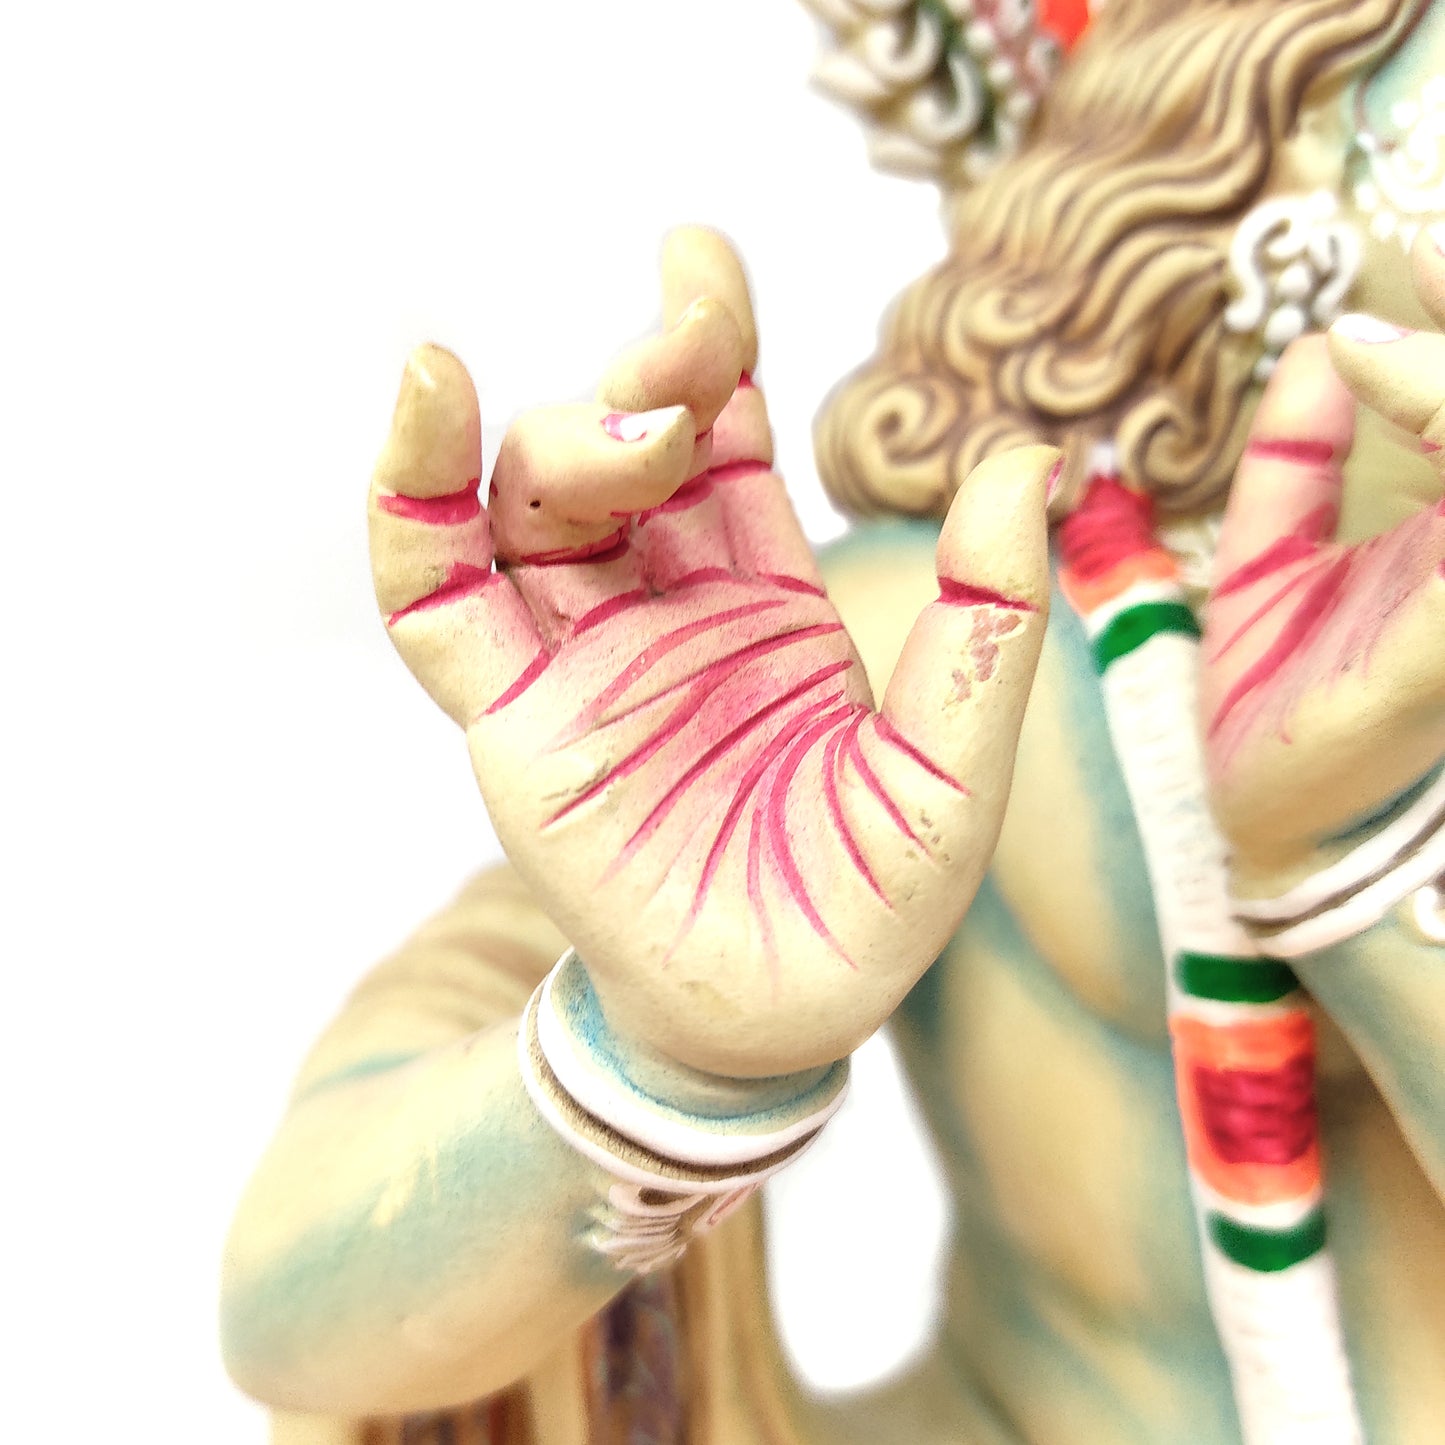 19.75" Terracotta Krishna India God Handmade Sculpture Figurine Clay Statue